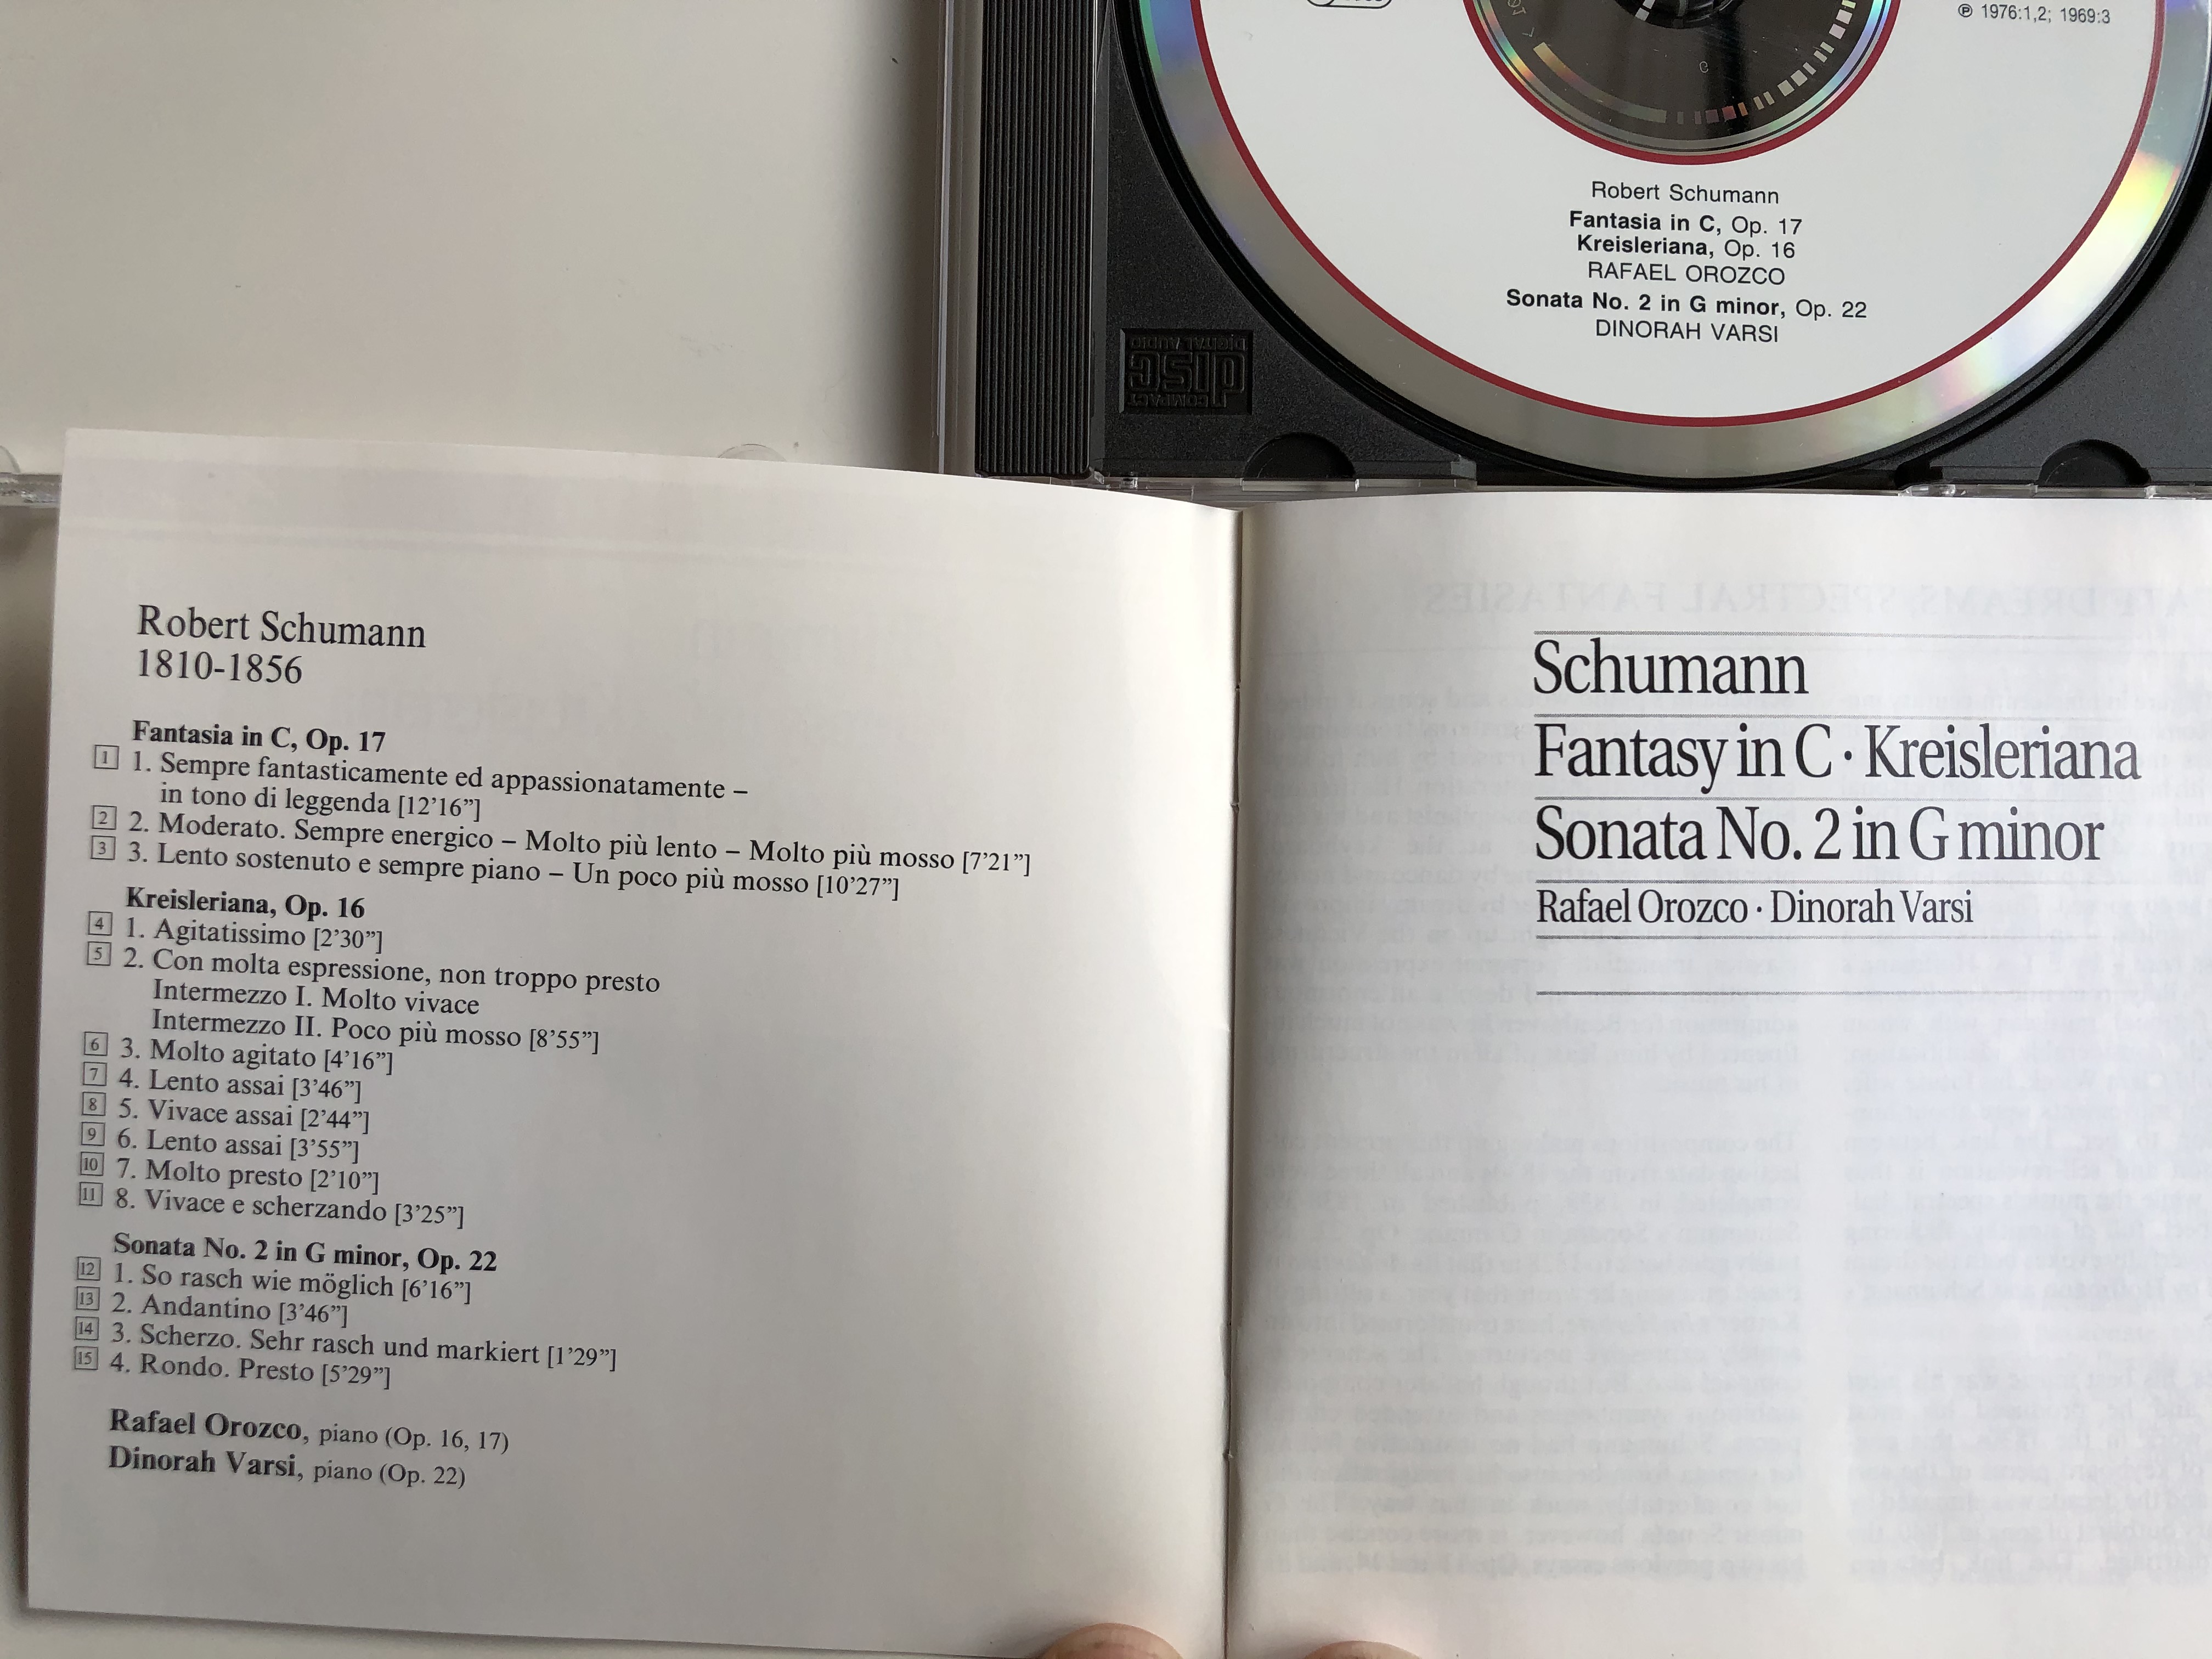 schumann-fantasy-in-c-kreisleriana-sonata-no.-2-in-g-minor-rafael-orozco-dinorah-varsi-philips-audio-cd-1994-442-653-2-2-.jpg